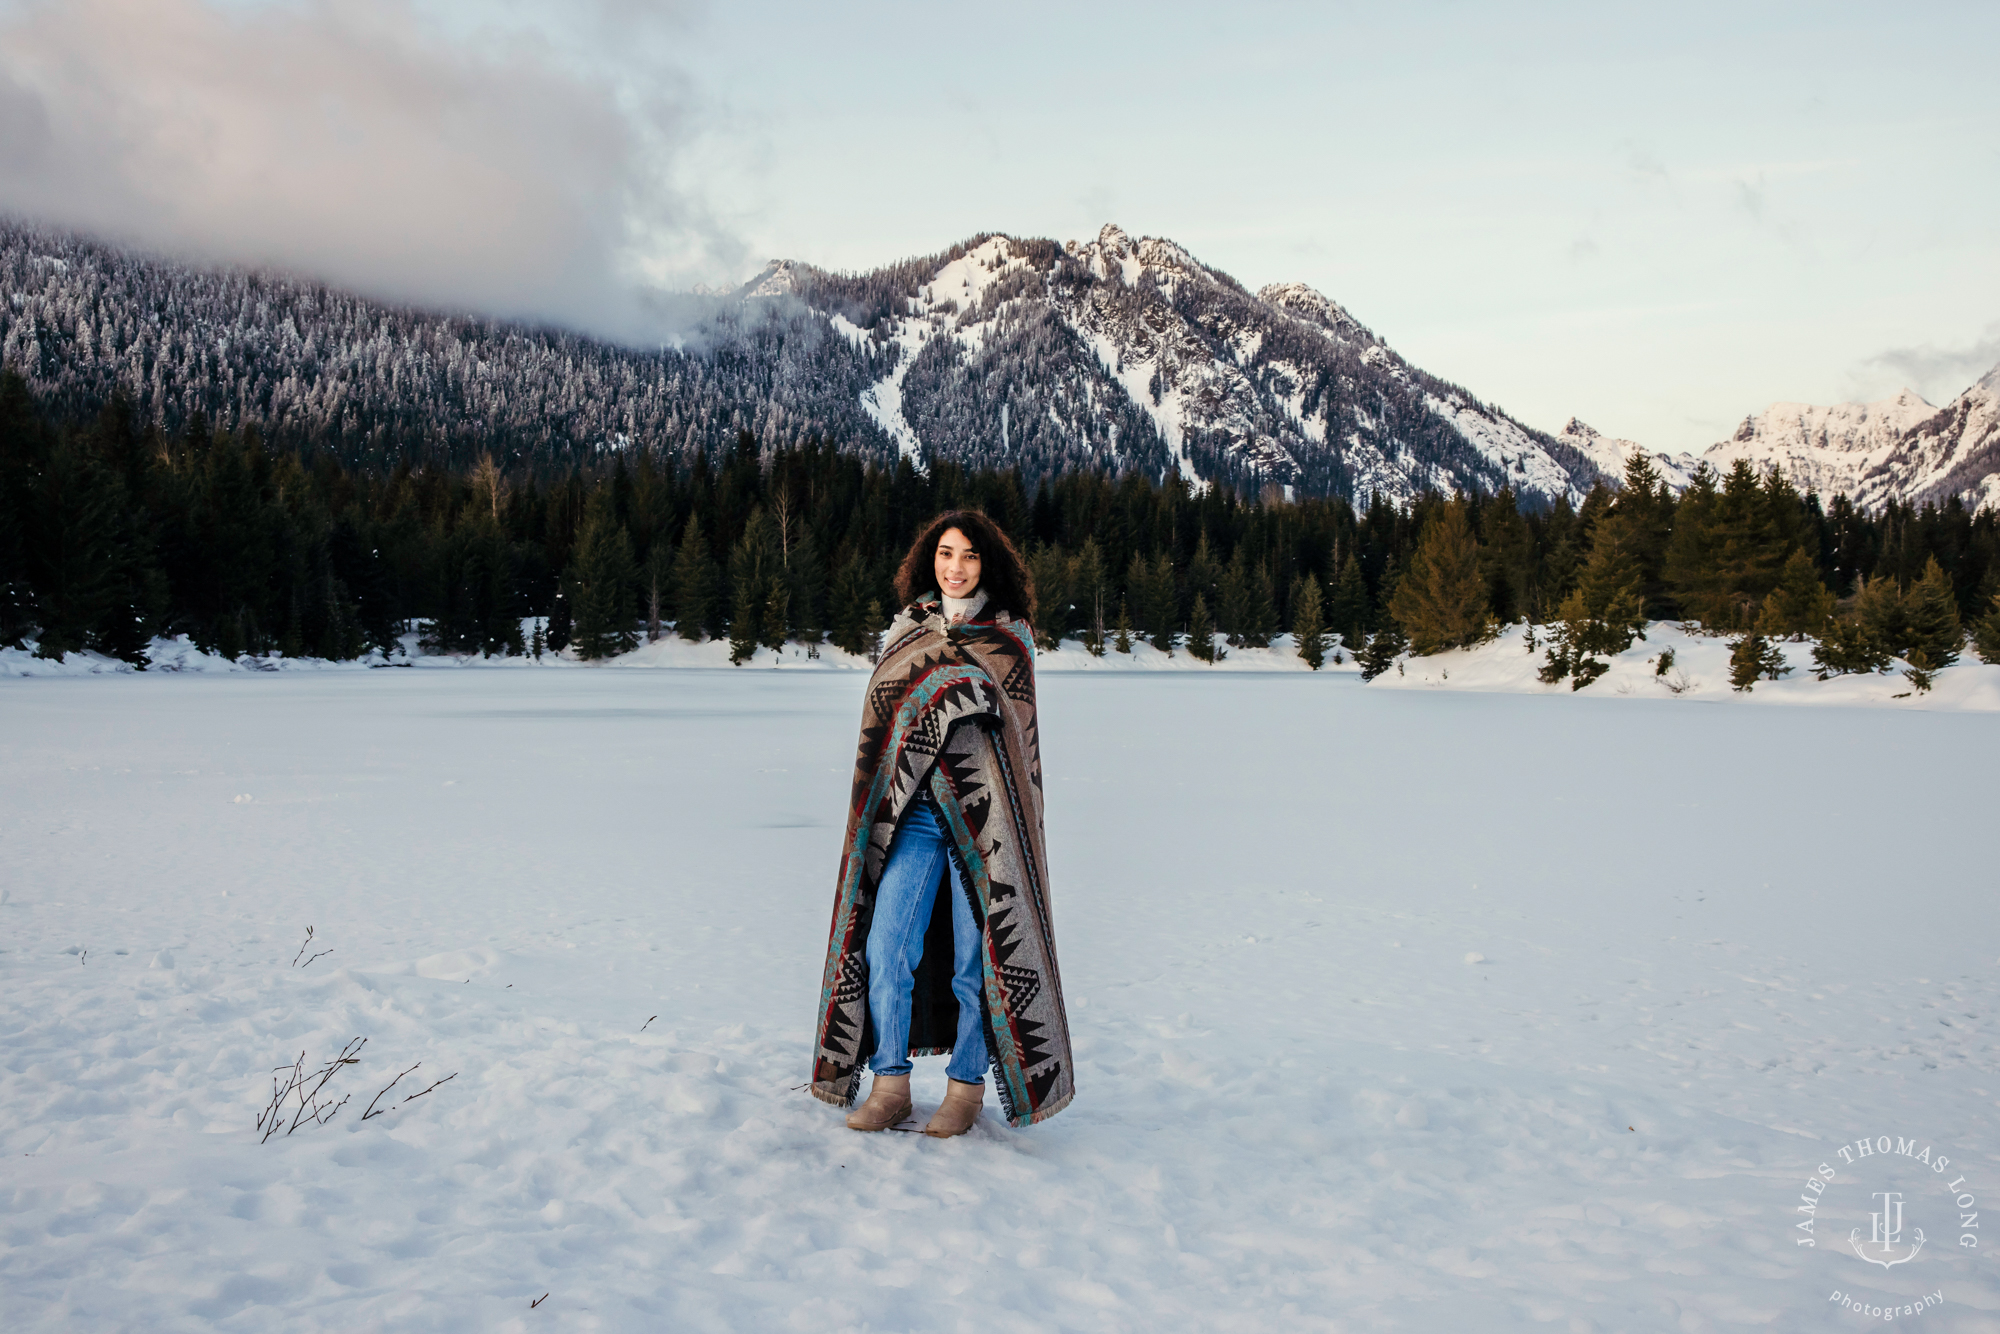 Adventure senior portrait session in the snow by Snoqualmie senior portrait photographer James Thomas Long Photography